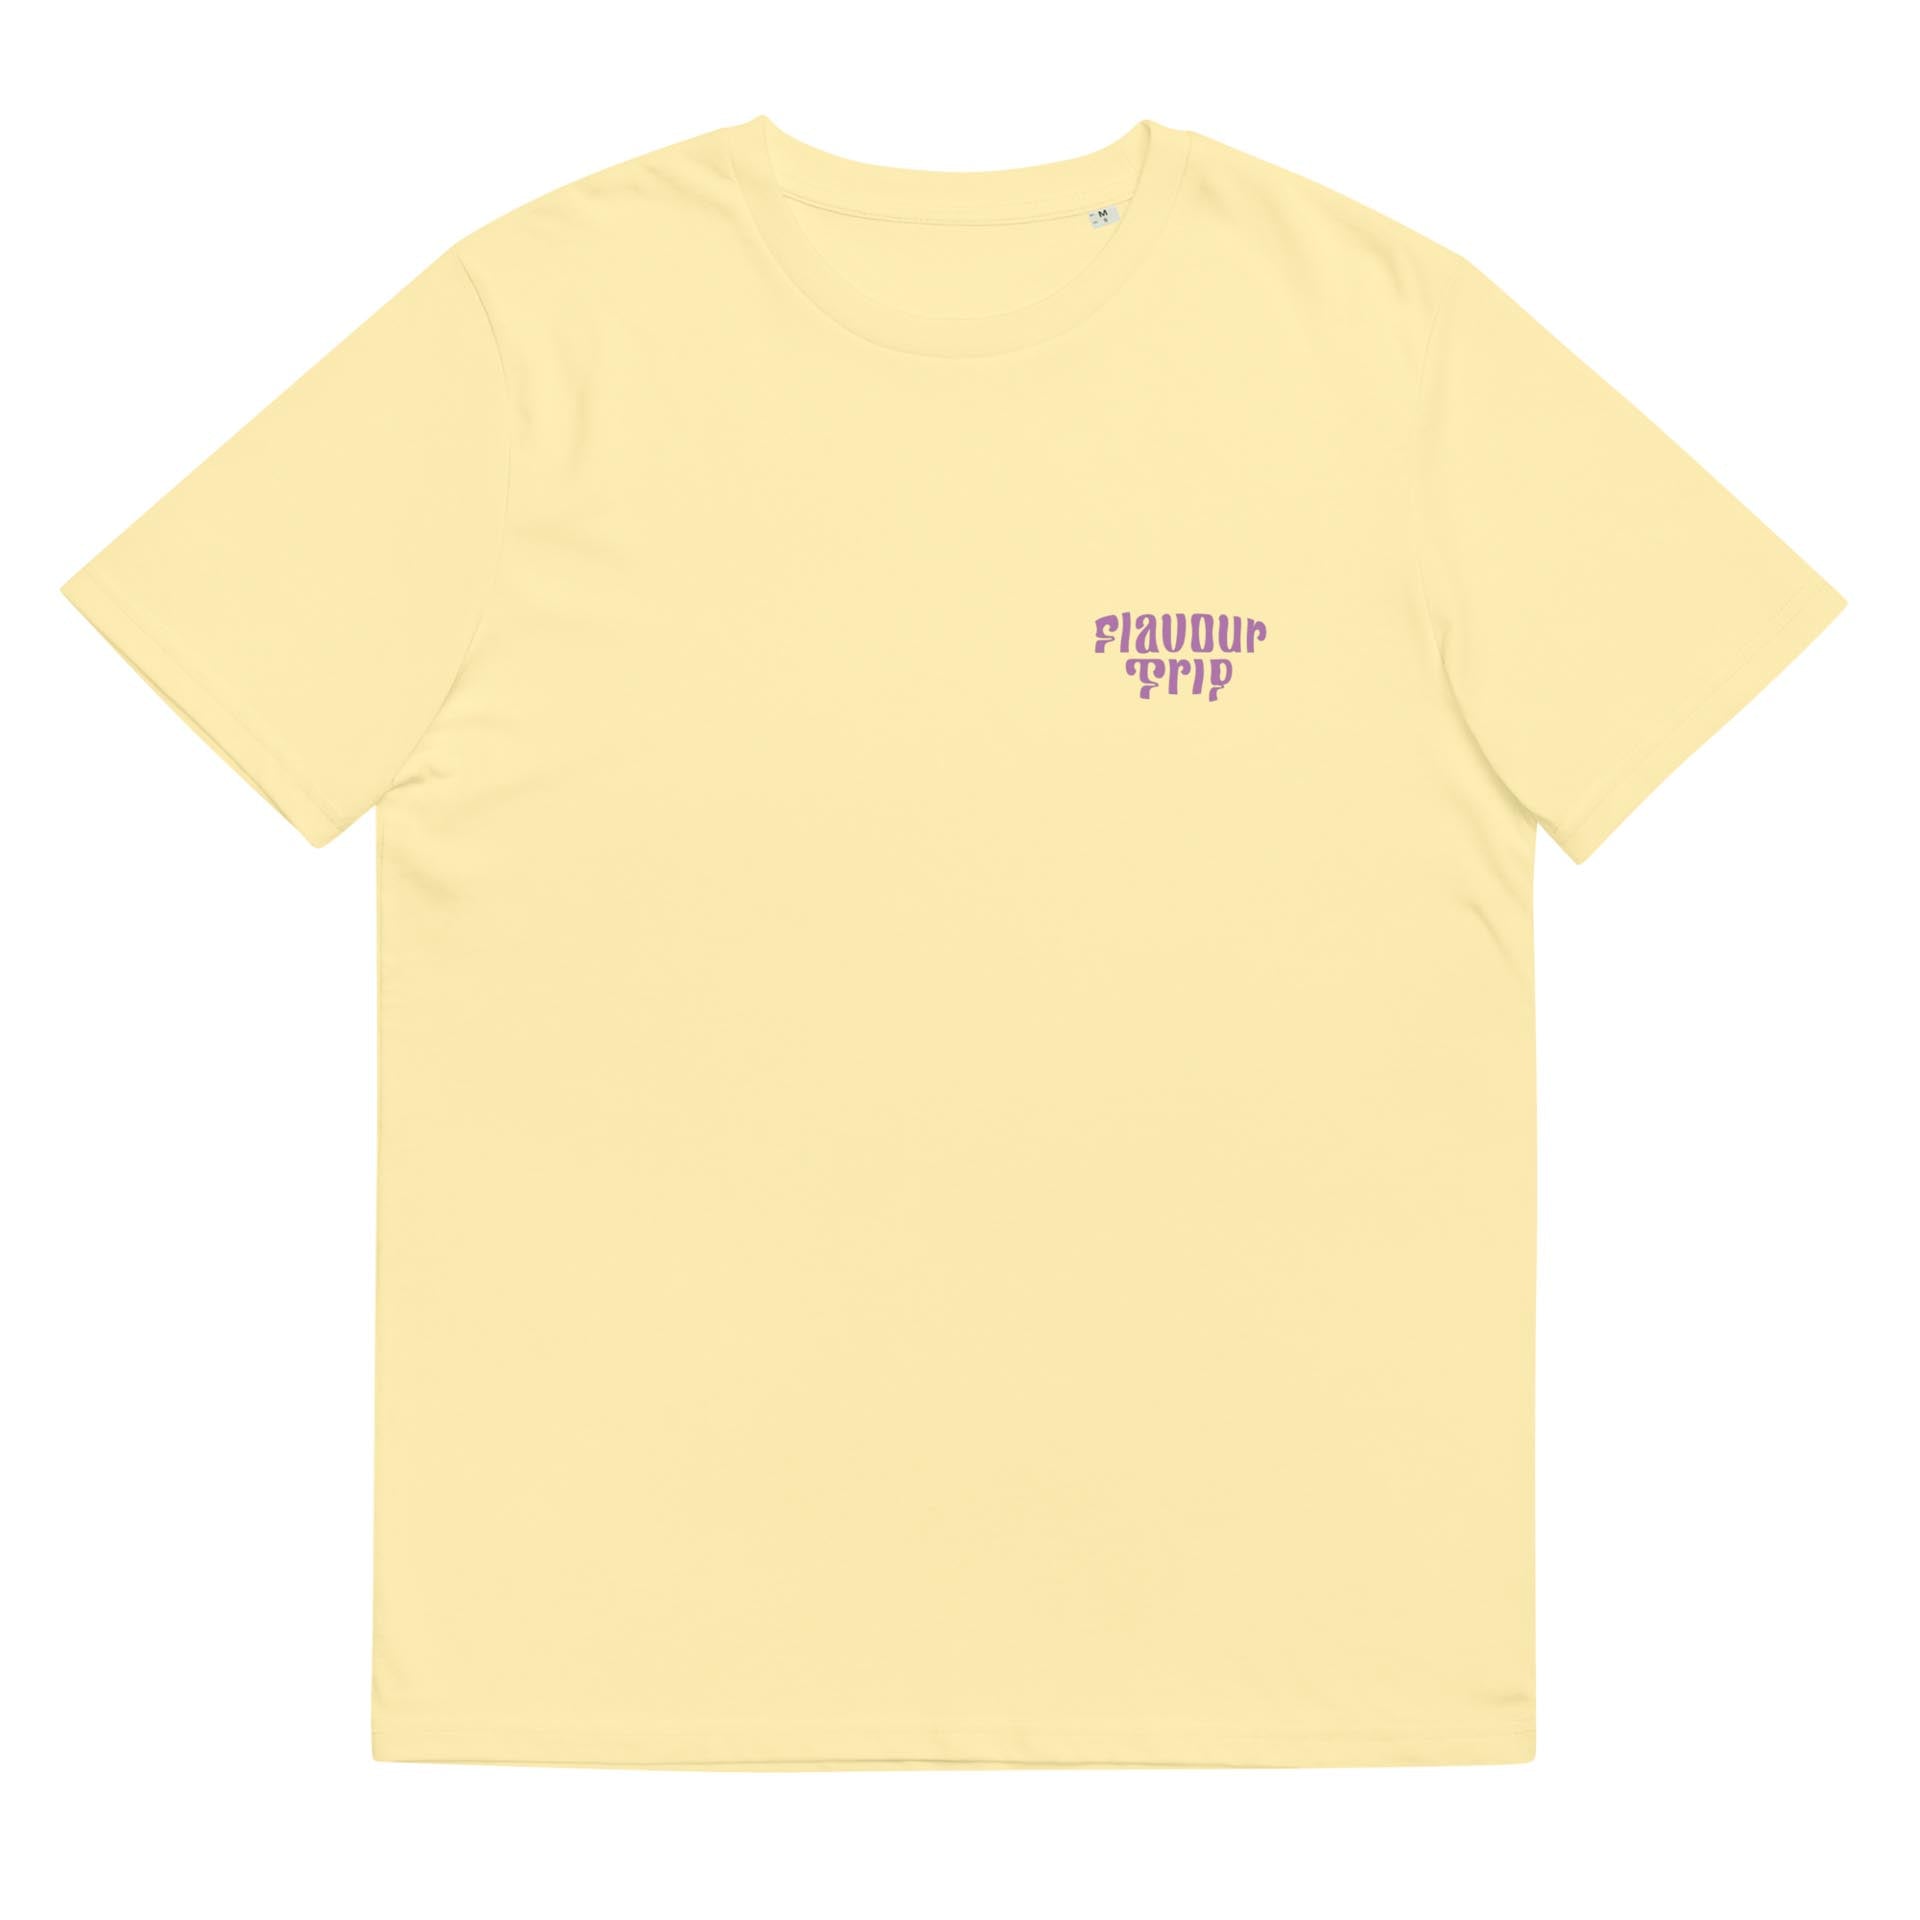 FLAVOUR TROOPER - Butter T-Shirt Unisex